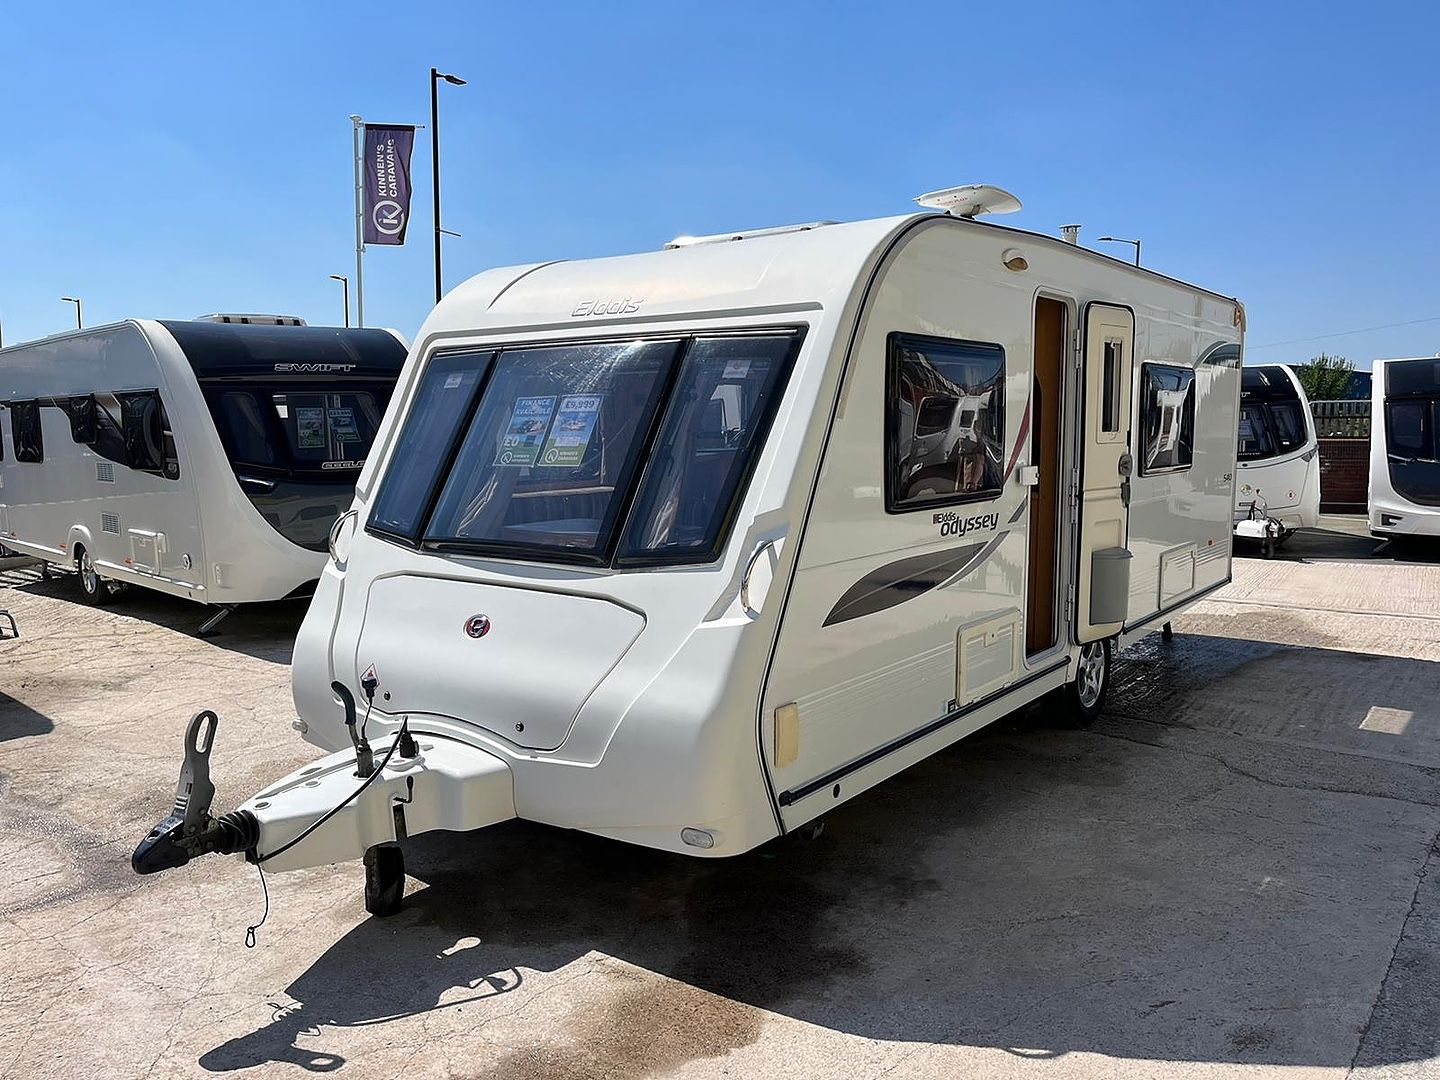 ElddisOdyssey 540Touring Caravan for sale